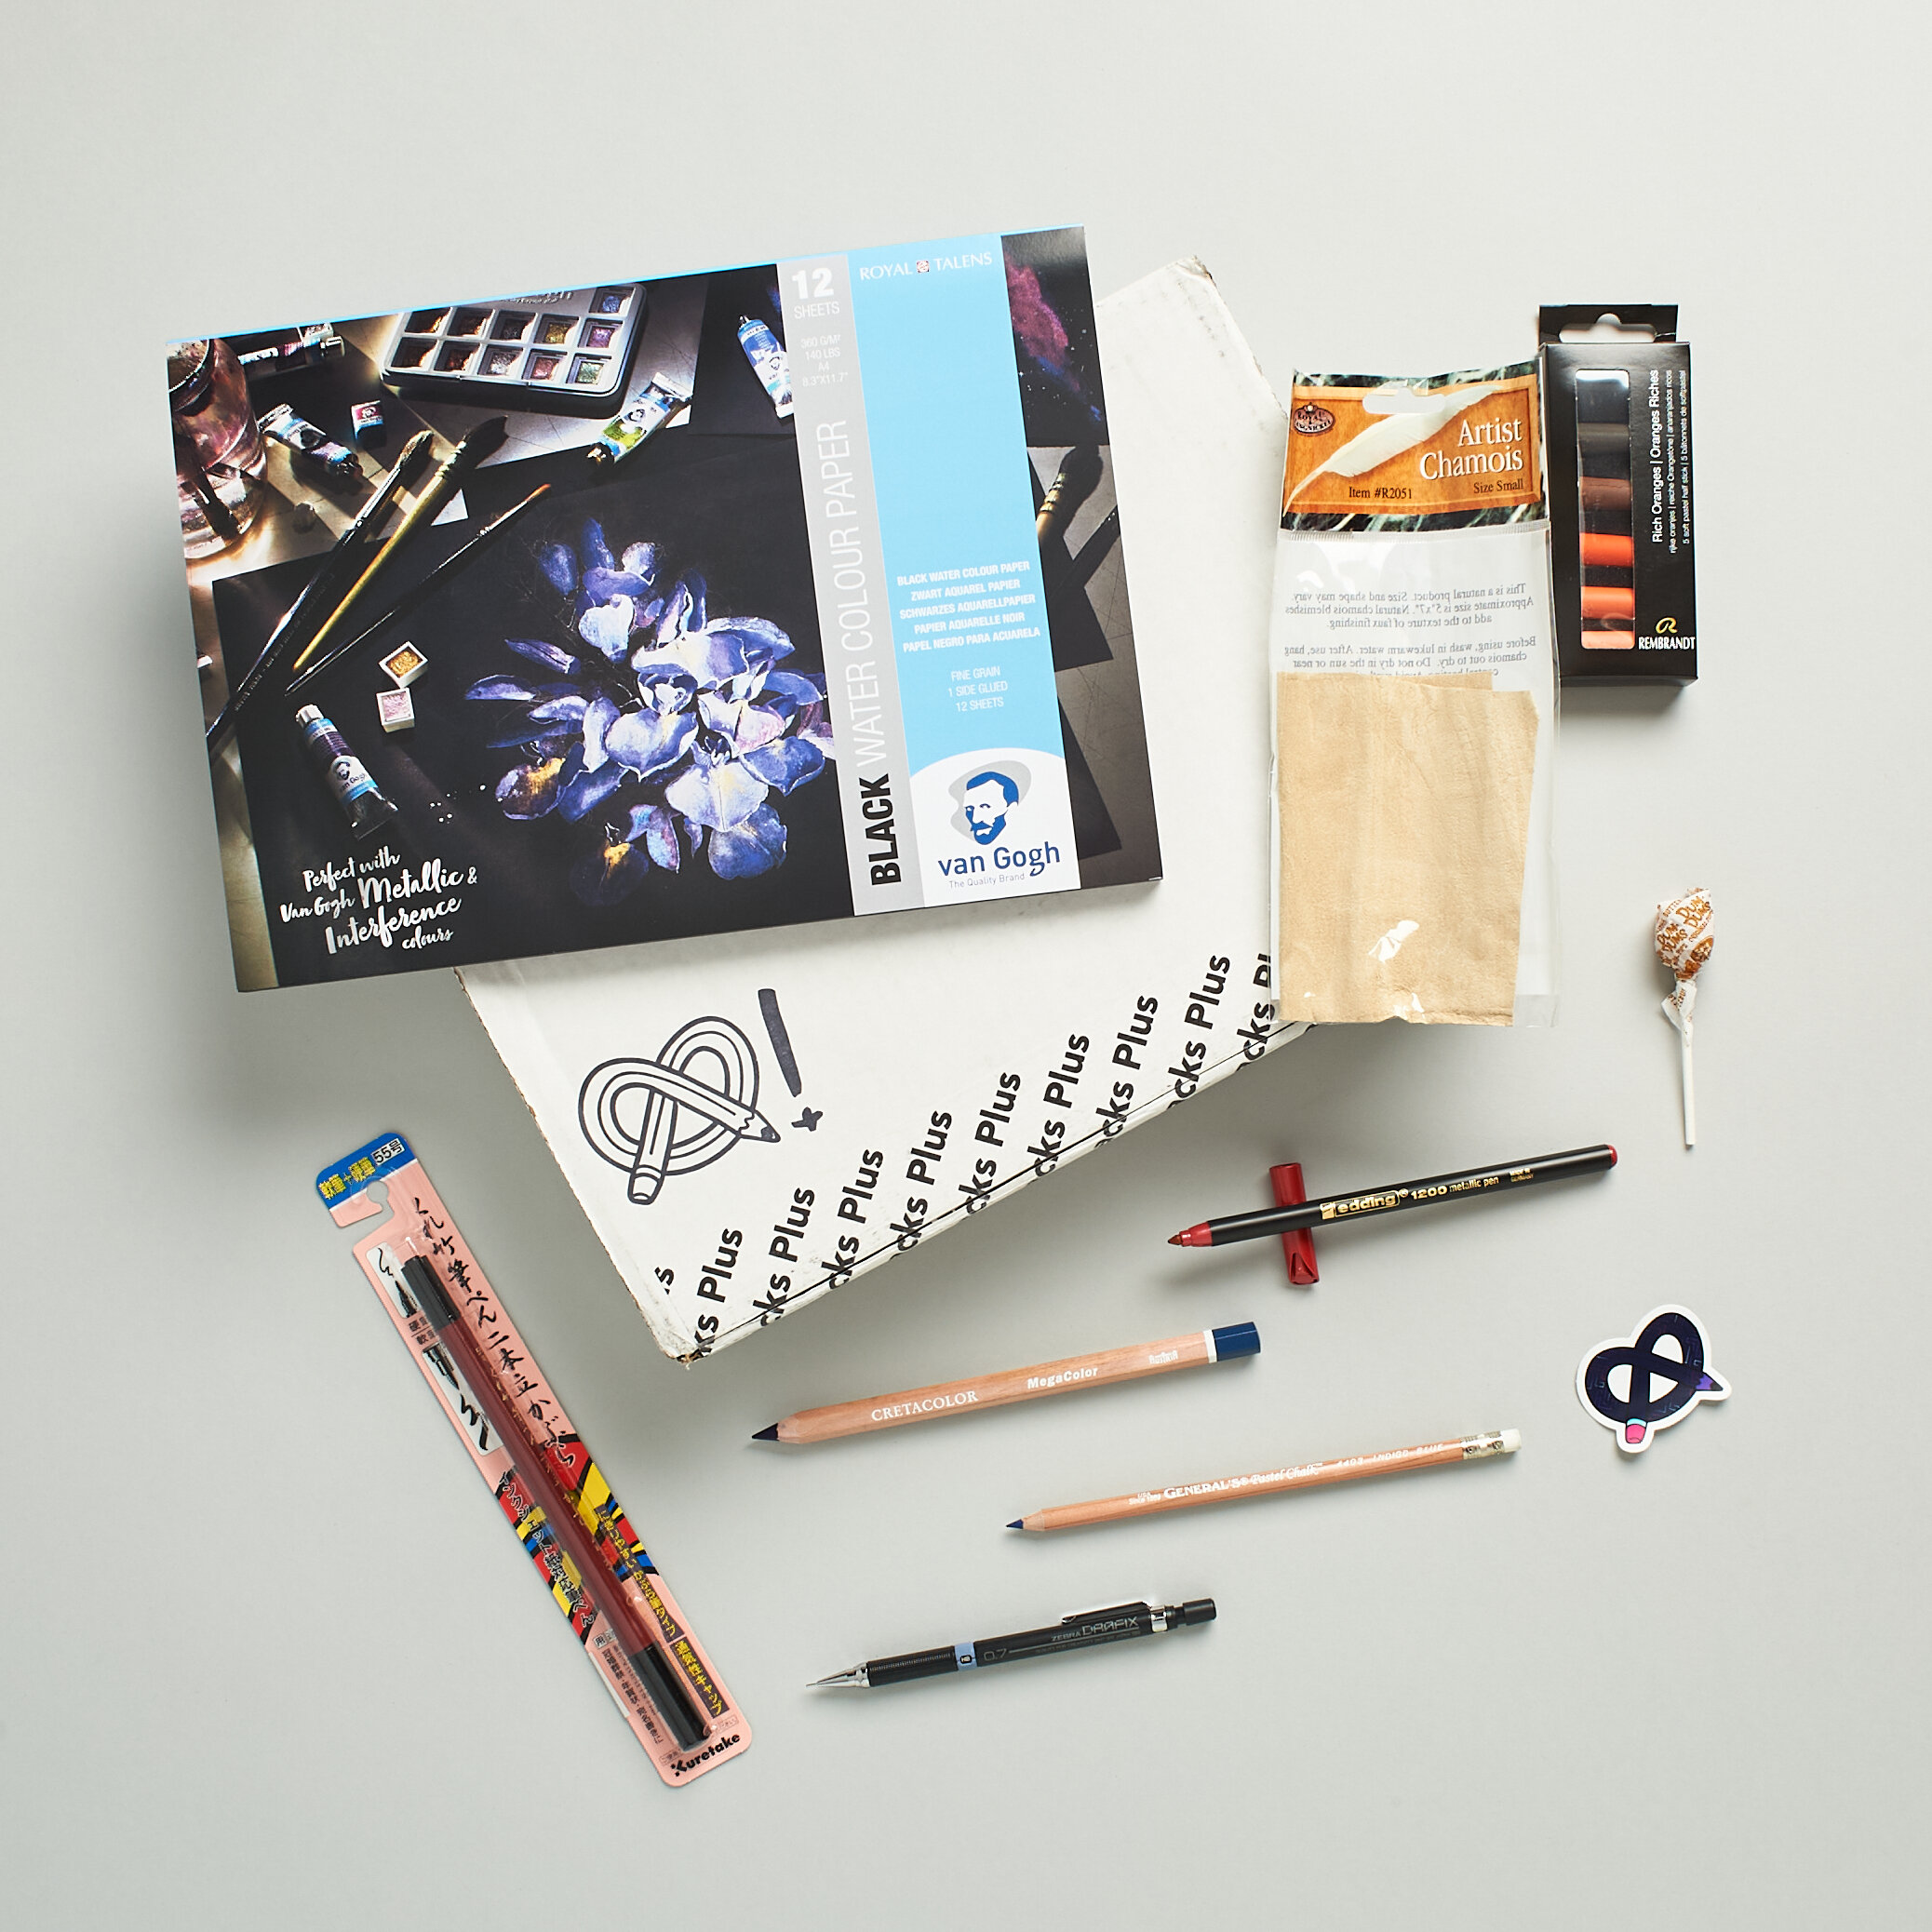 ArtSnacks - The Best Art Supply Subscription Boxes. — Studio